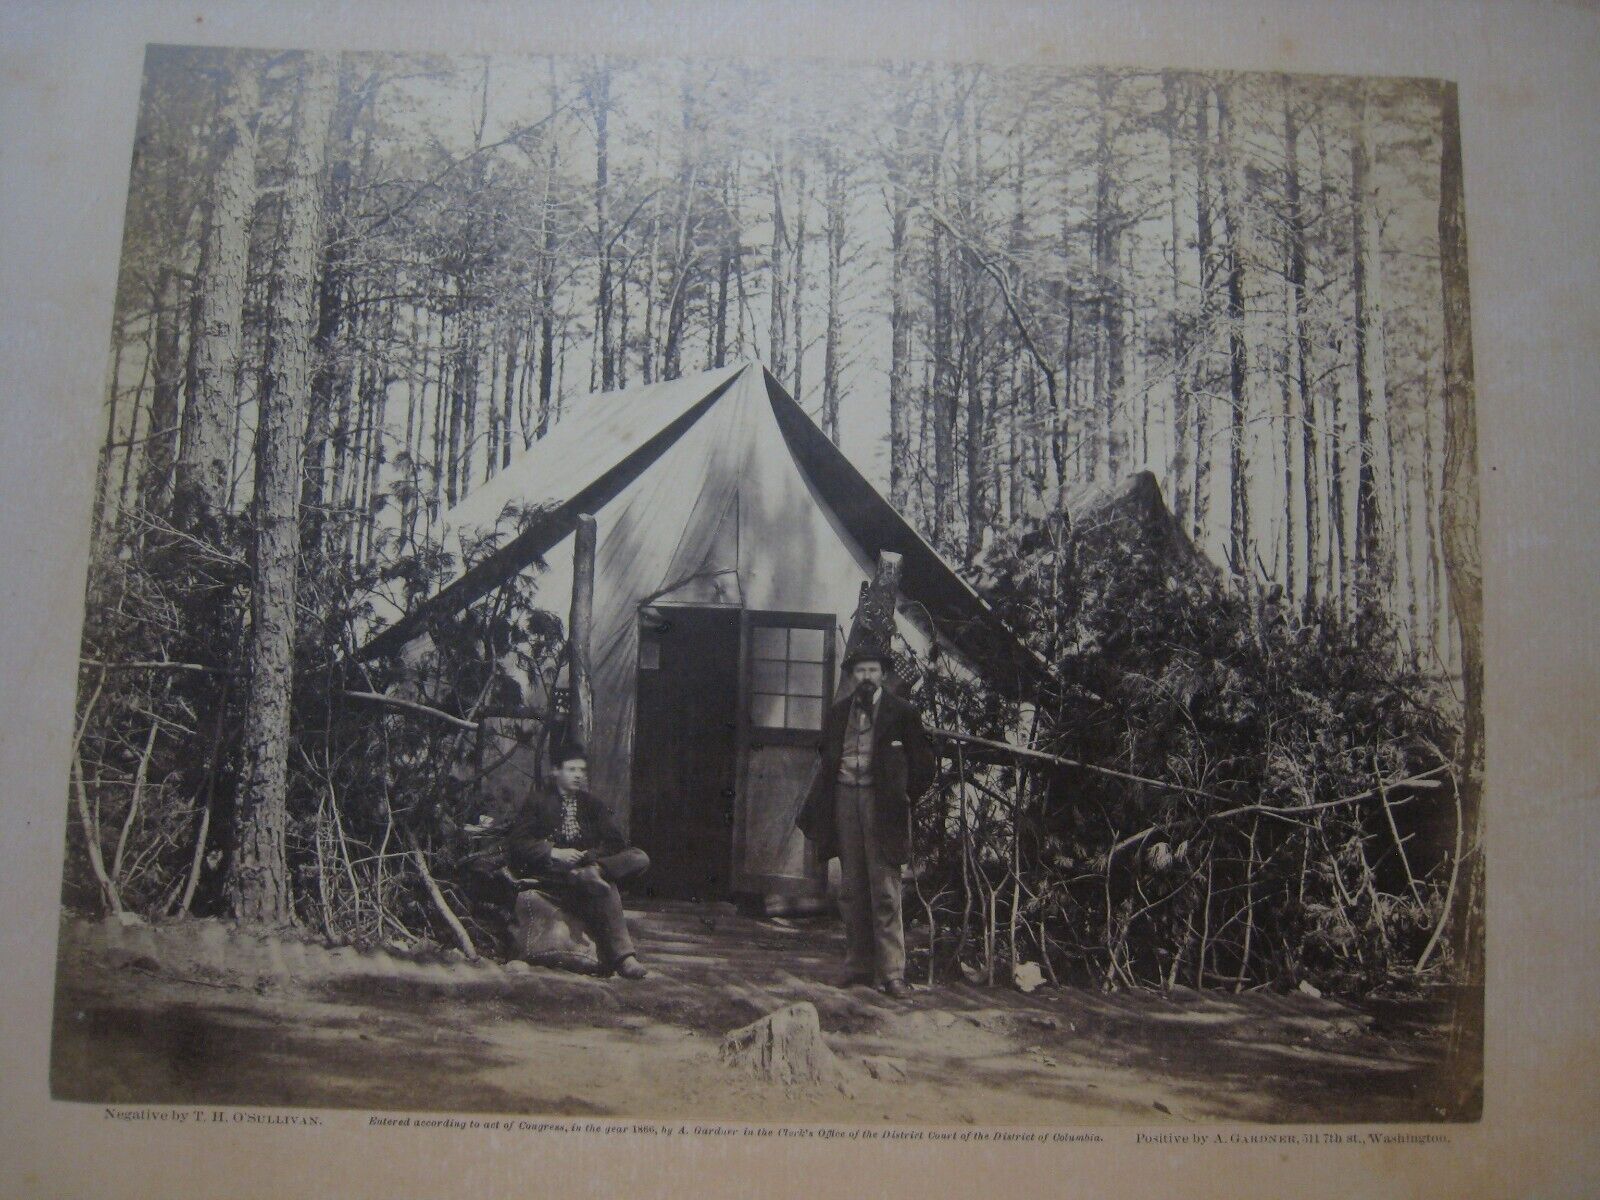 RARE Alexander Gardner CIVIL WAR Albumen Photo ... POST OFFICE, POTOMAC, 1863